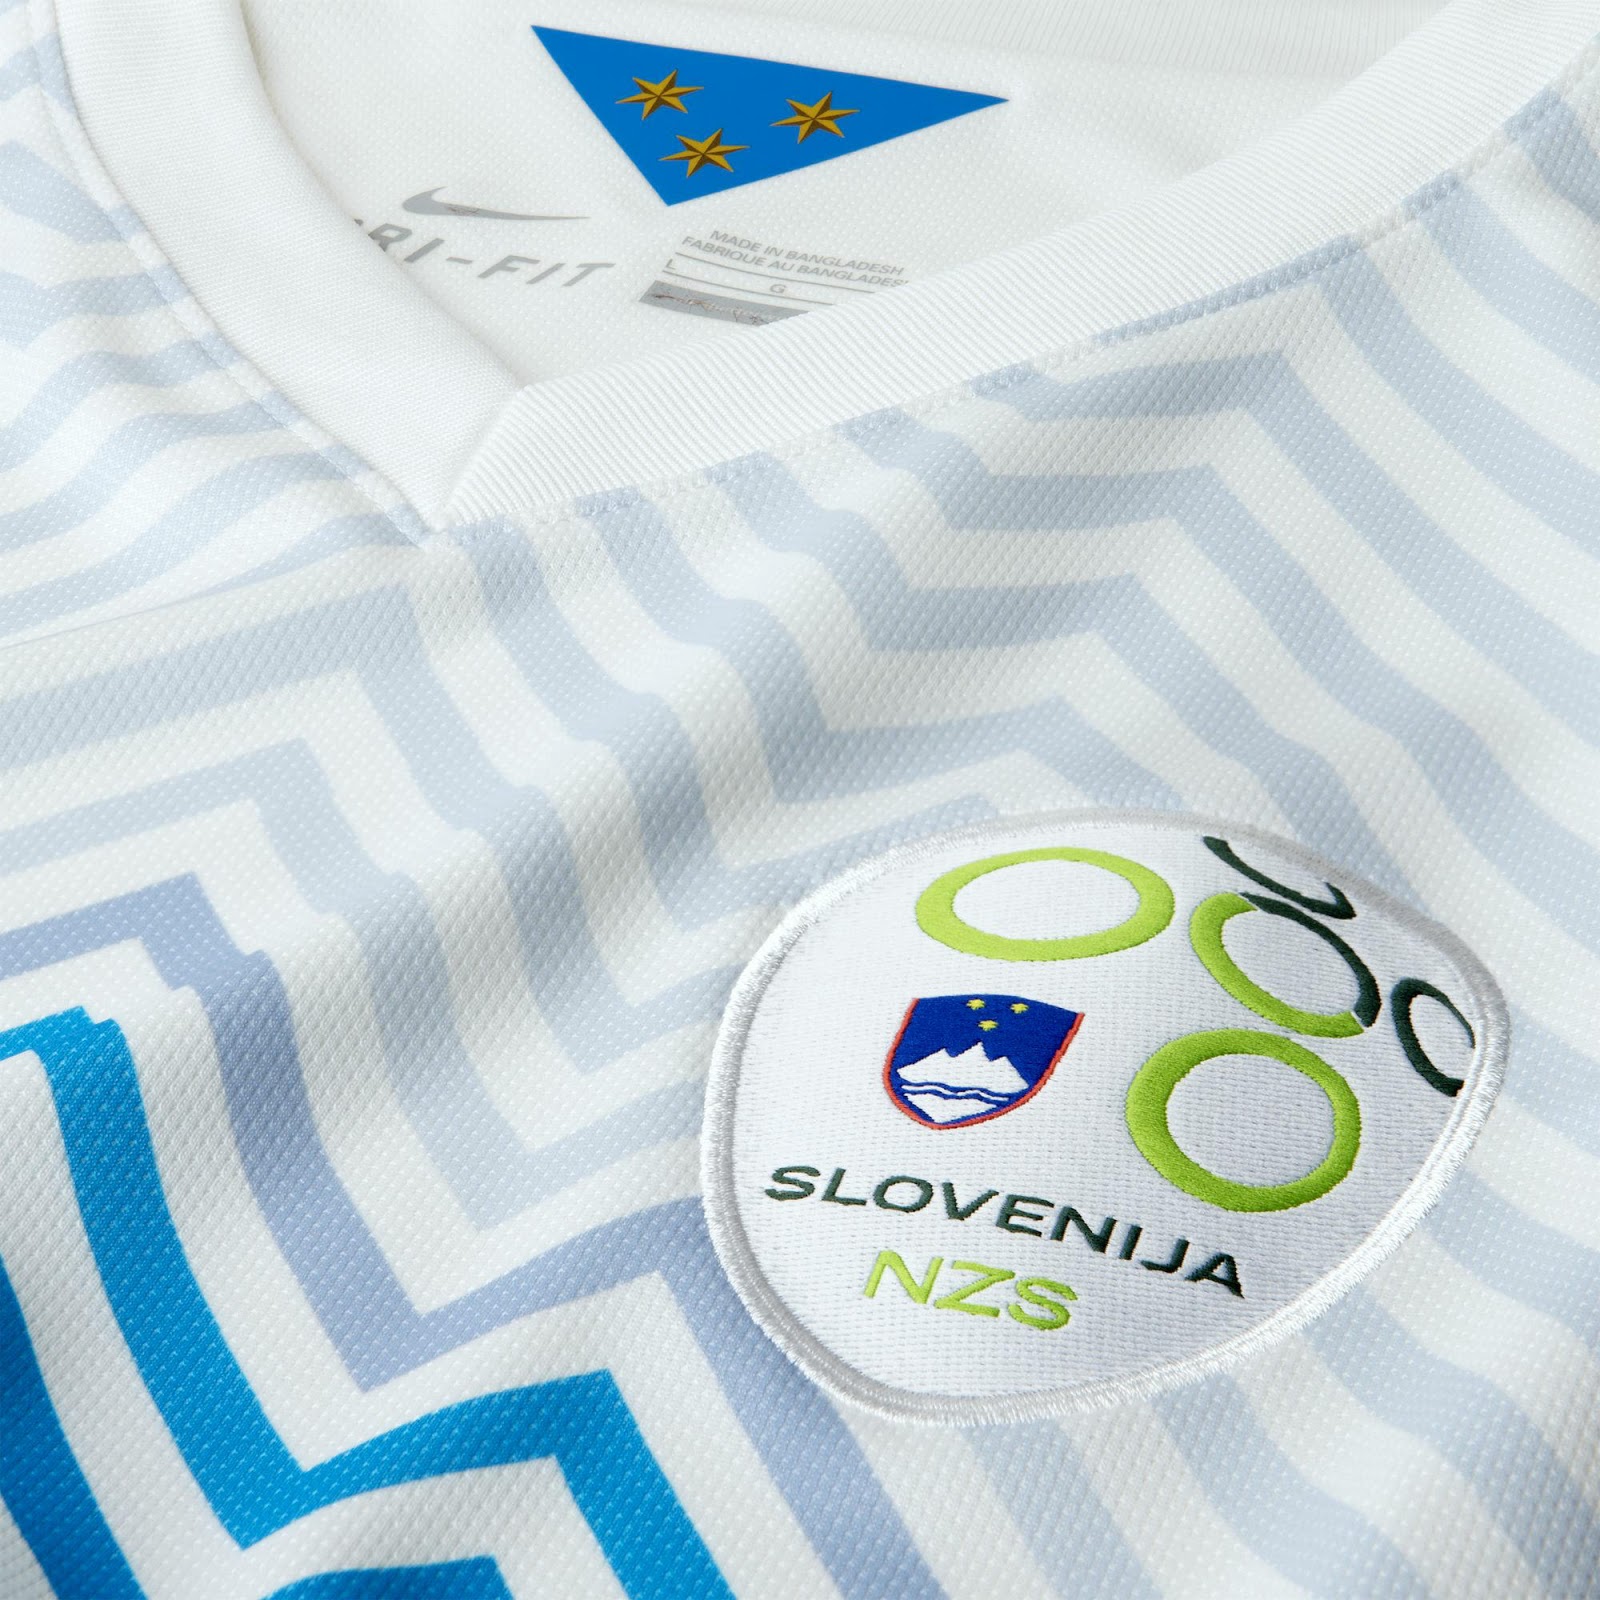 Slovenia 2022 Home & Away Kits Vote - No More Kits Designed